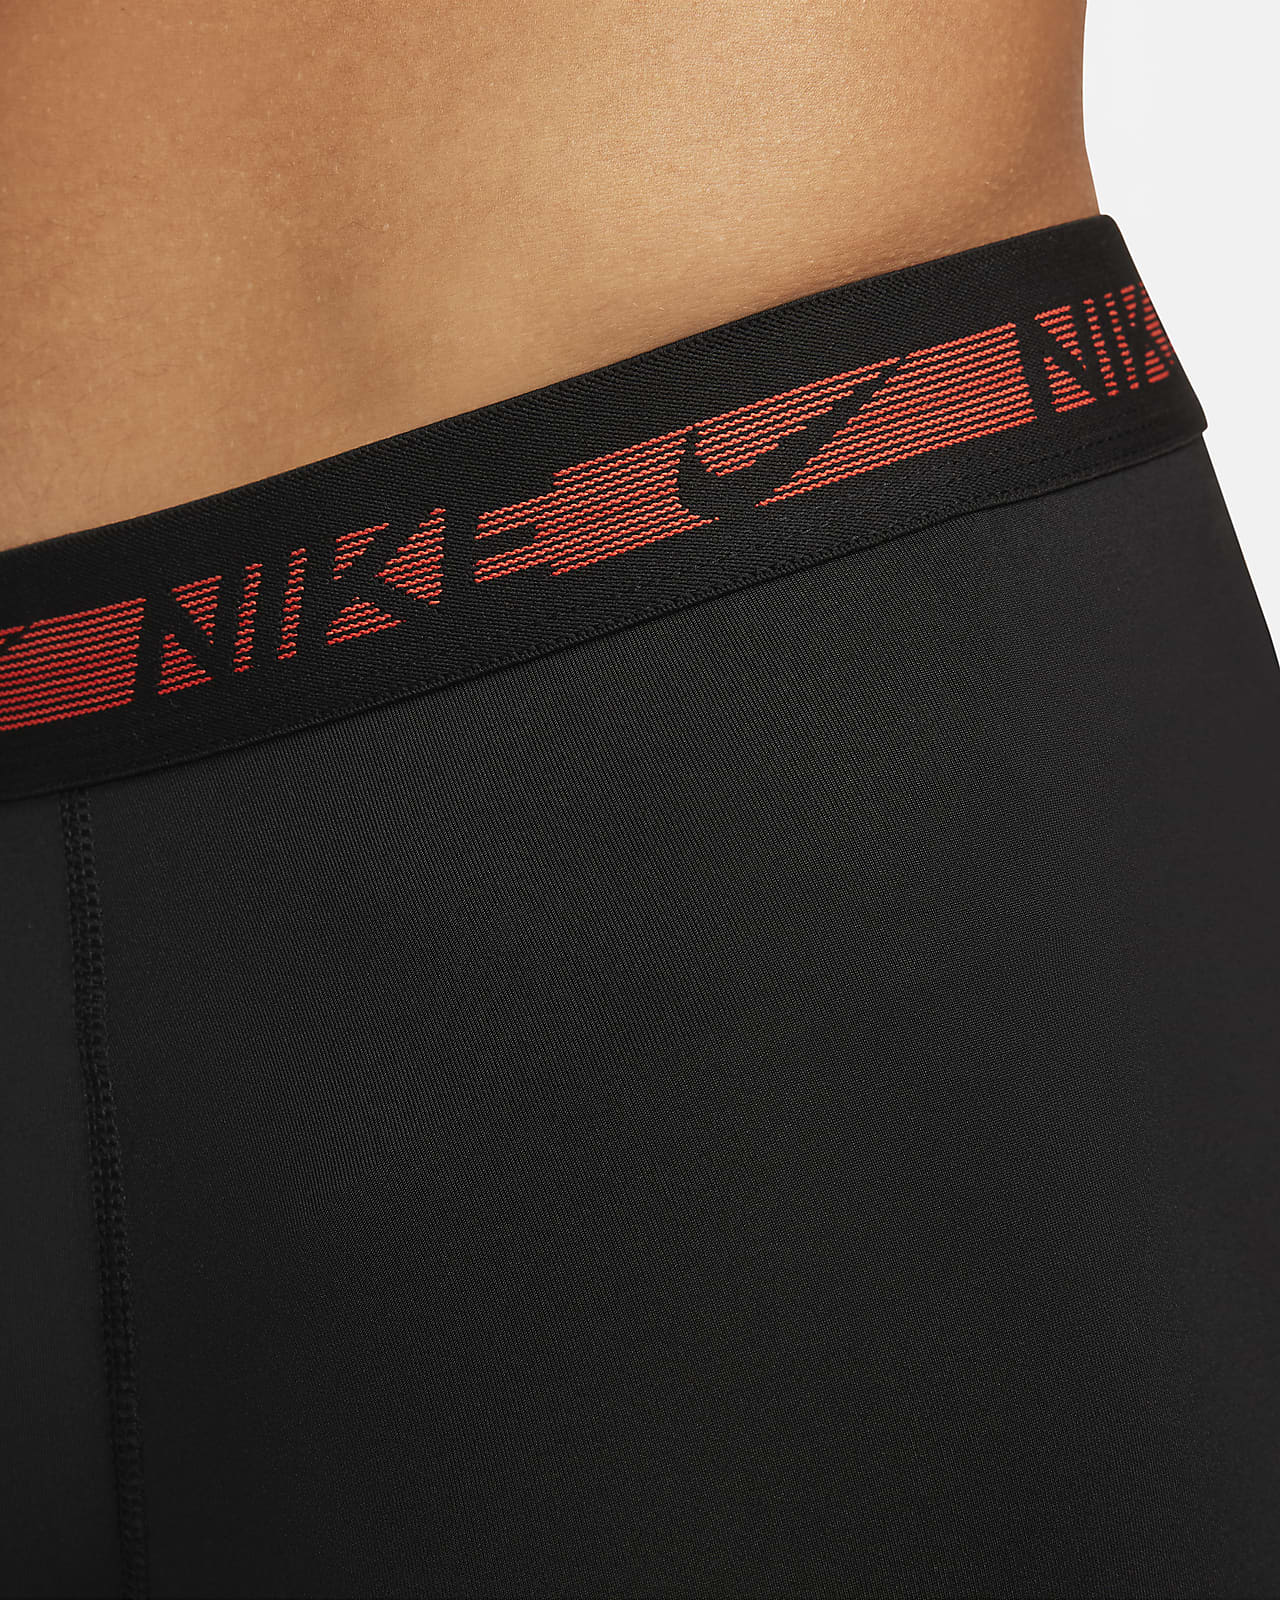 Nike Flex Micro Men's Boxer Briefs (3-Pack).